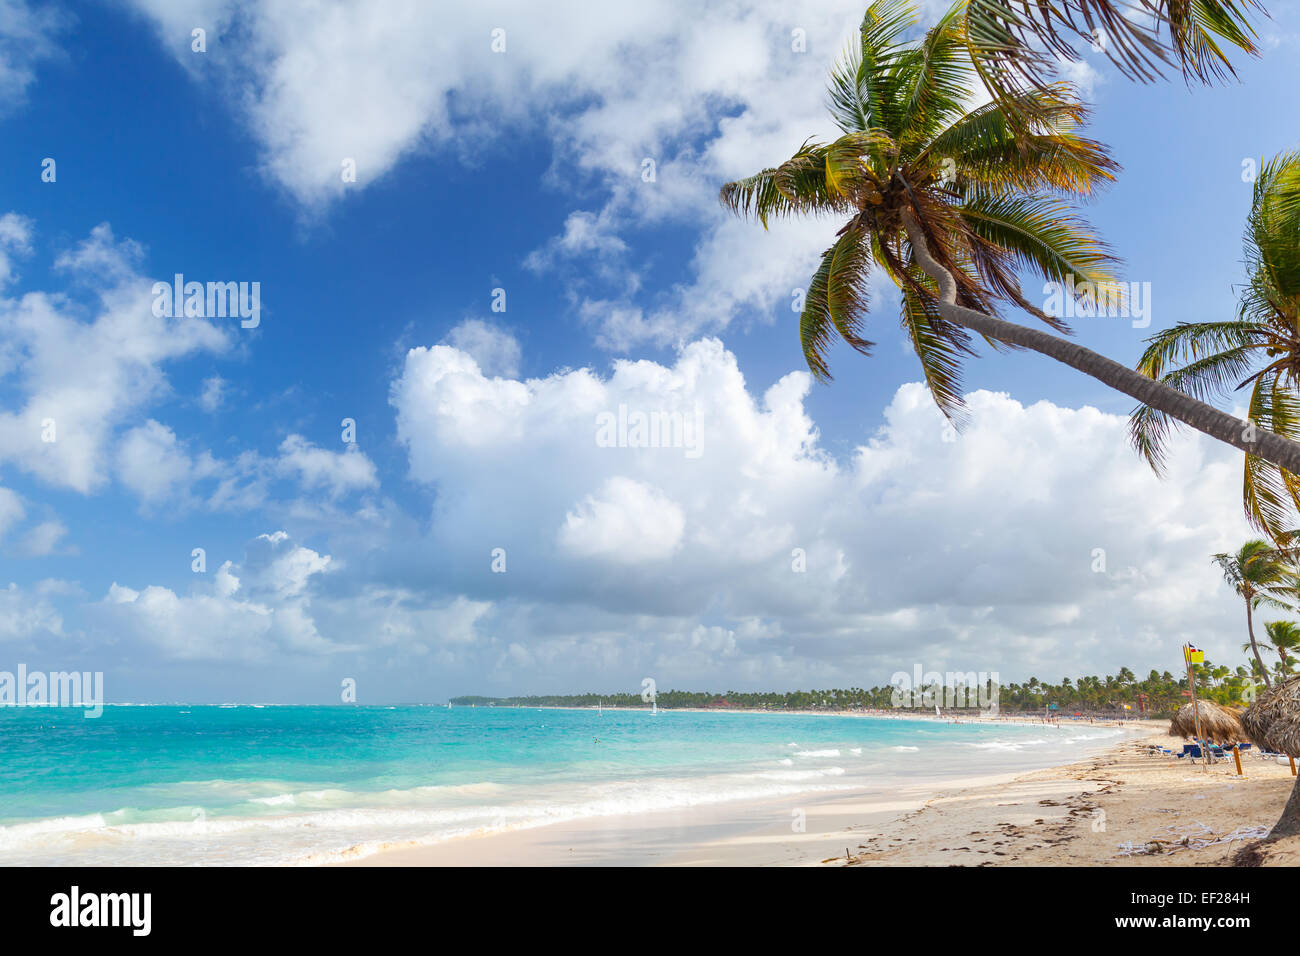 Palm tree on sandy beach. Coast of Atlantic ocean, Dominican republic Stock Photo